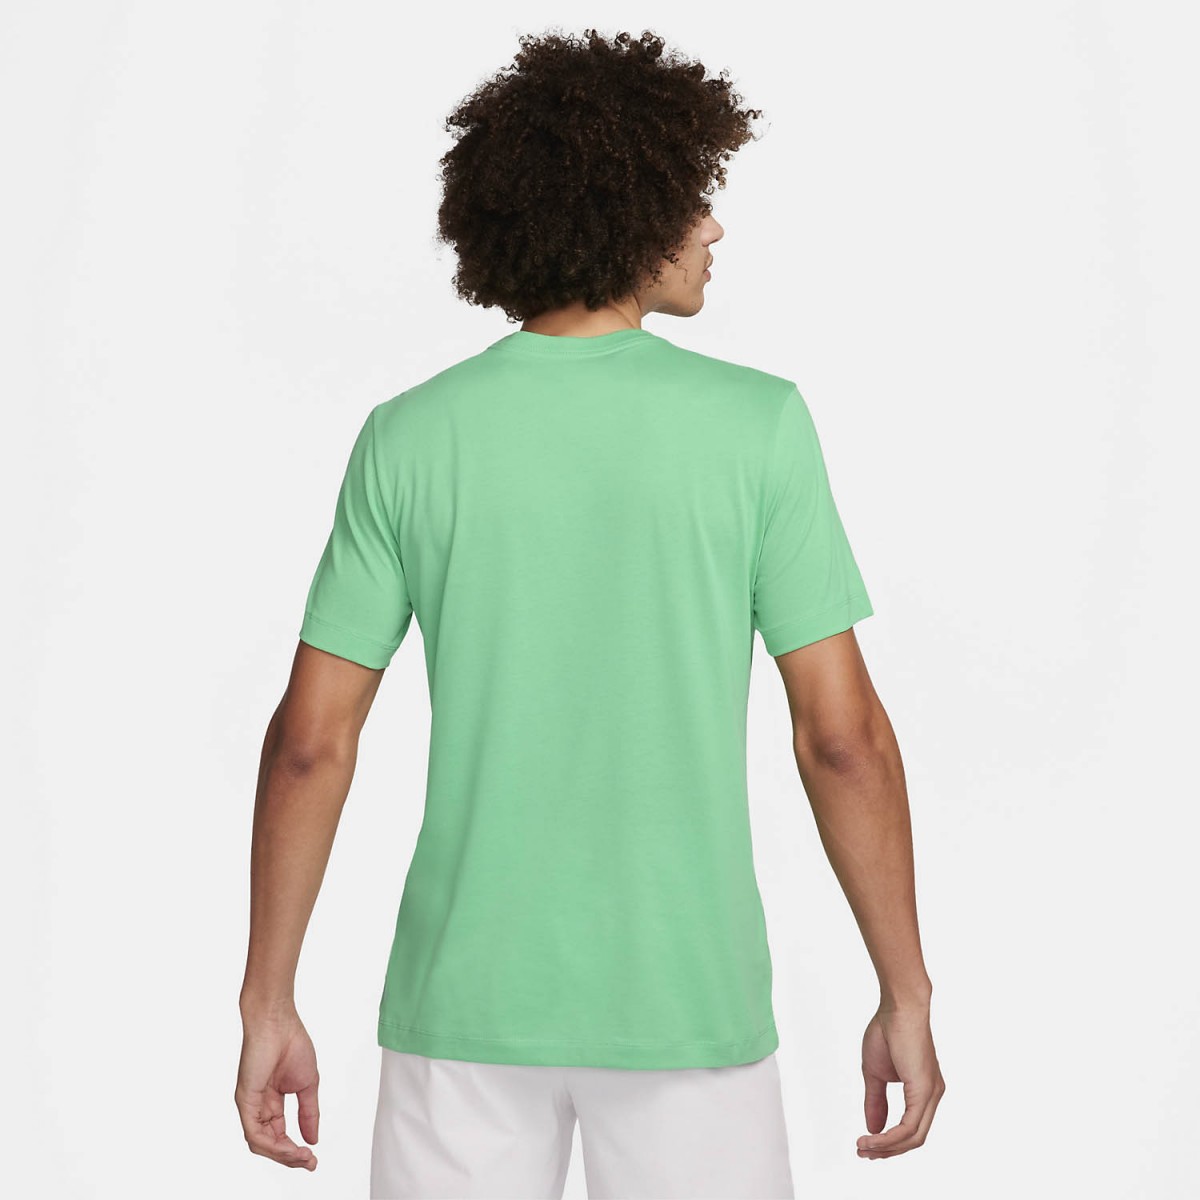 Теннисная футболка мужская Nike Rafa Tennis T-Shirt spring green